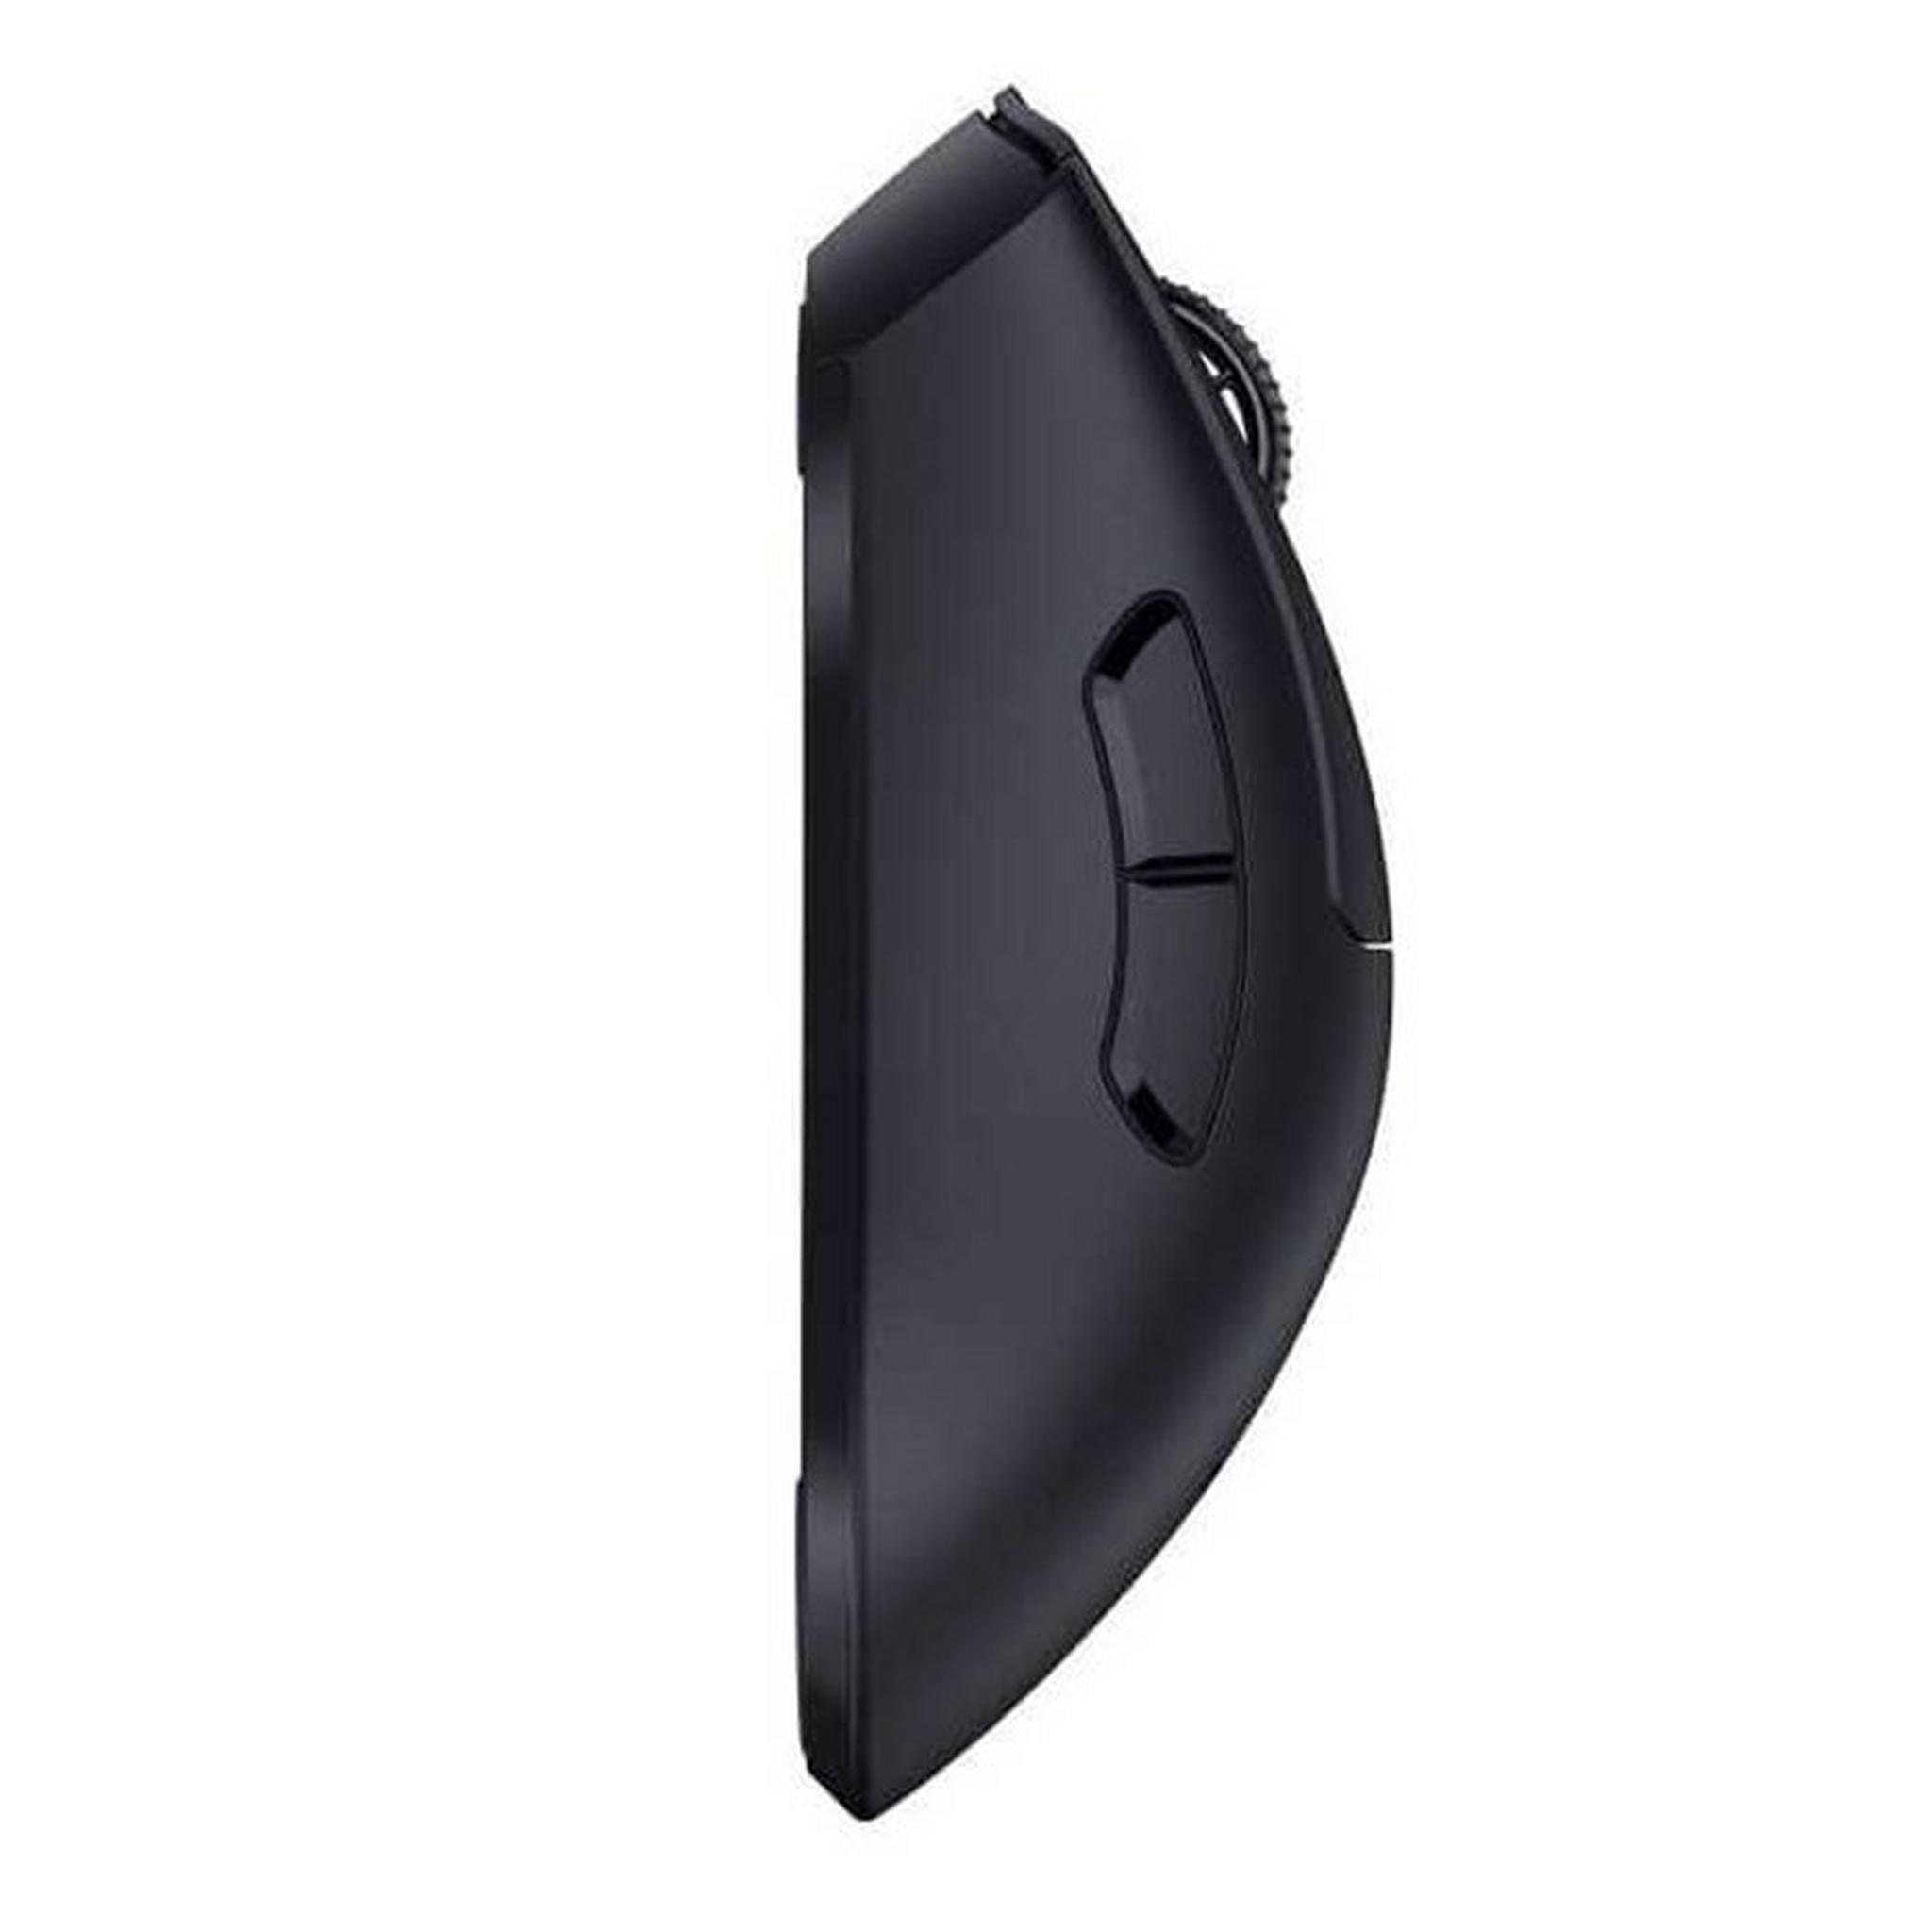 Razer DeathAdder V3 Pro Hyperpolling Wireless Gaming Mouse, RZ01-04630300-R3WL – Black